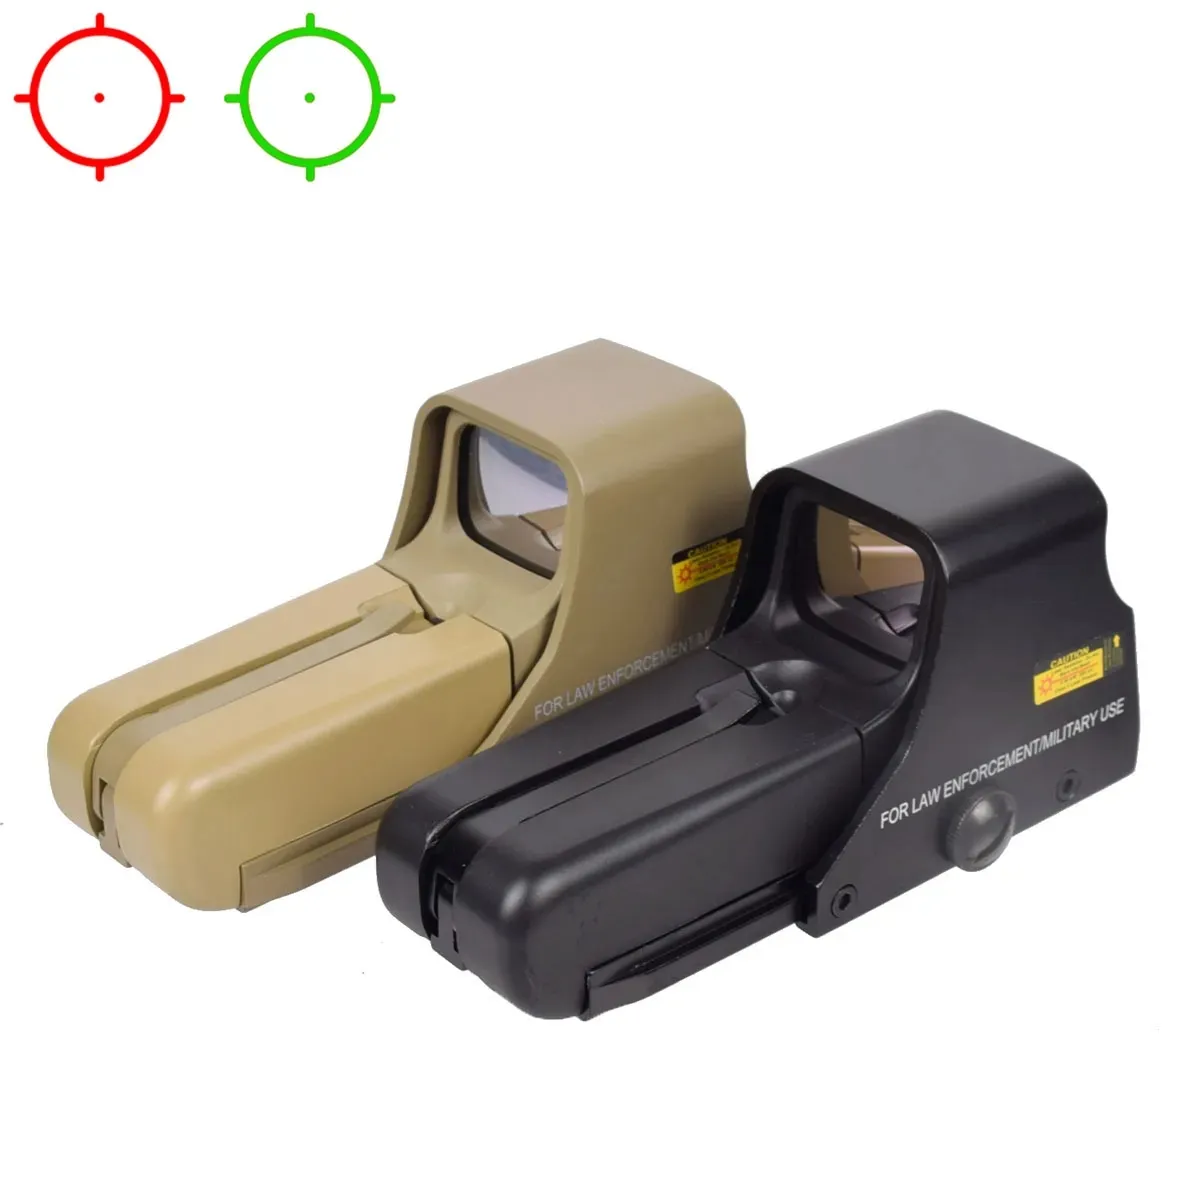 551 552 553 Holographic Green Red Dot Sight Optics Night Vision Gun Rifle Scope 20mm Rail Mount for HK416 AR15-Tan